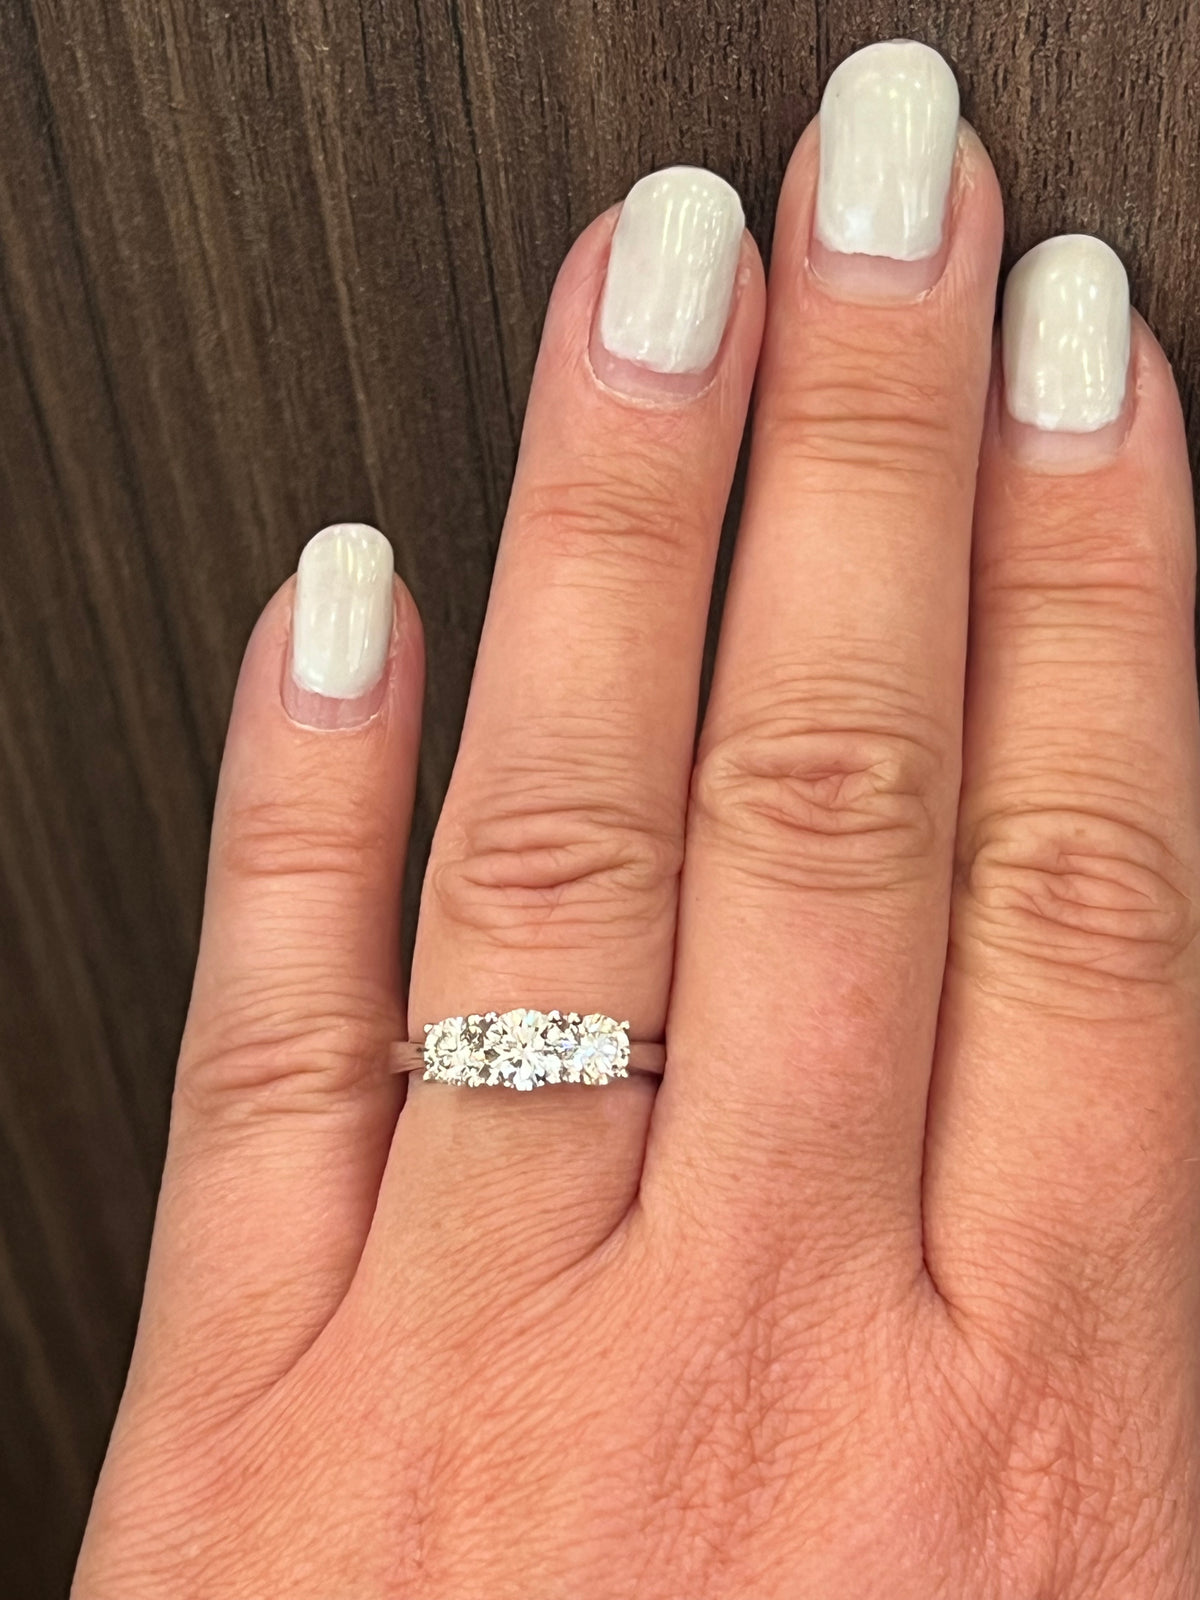 18K White Gold 1.25cttw Lab Grown Diamond 3 Stone Engagement Ring